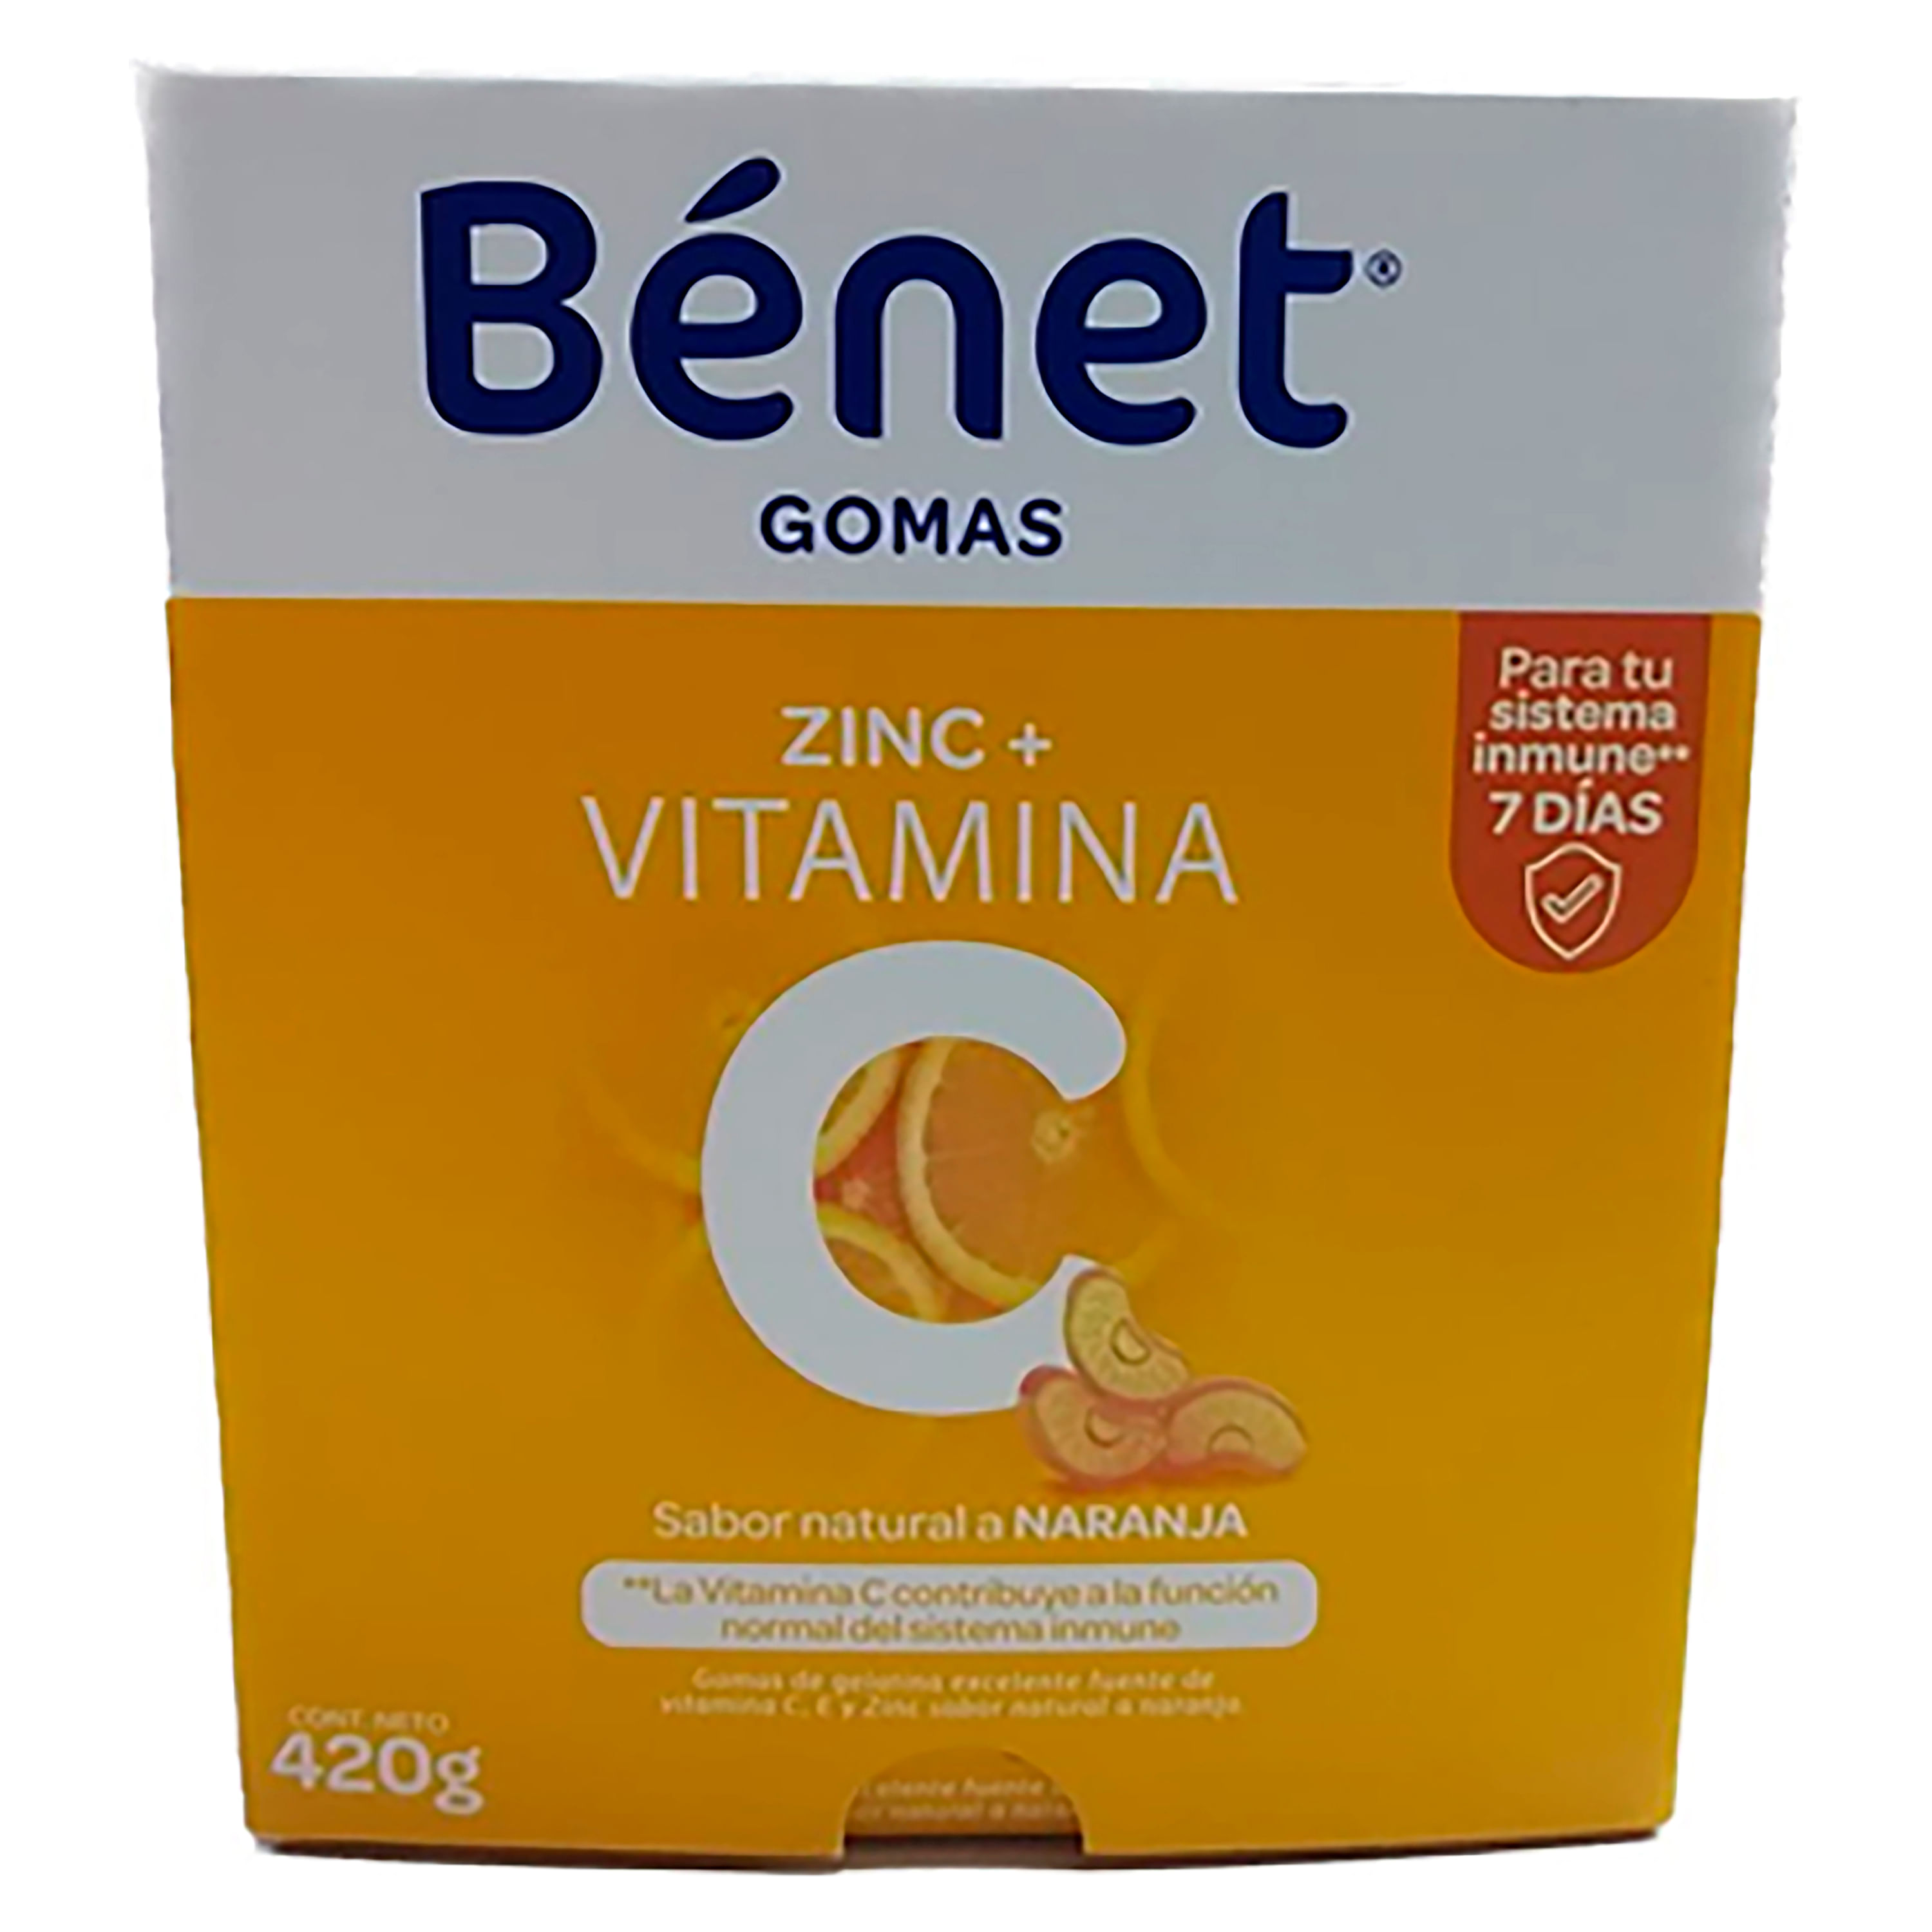 Vitamina C para Niños de 750 mg (Dr. Simi) – RAPID Multiservice